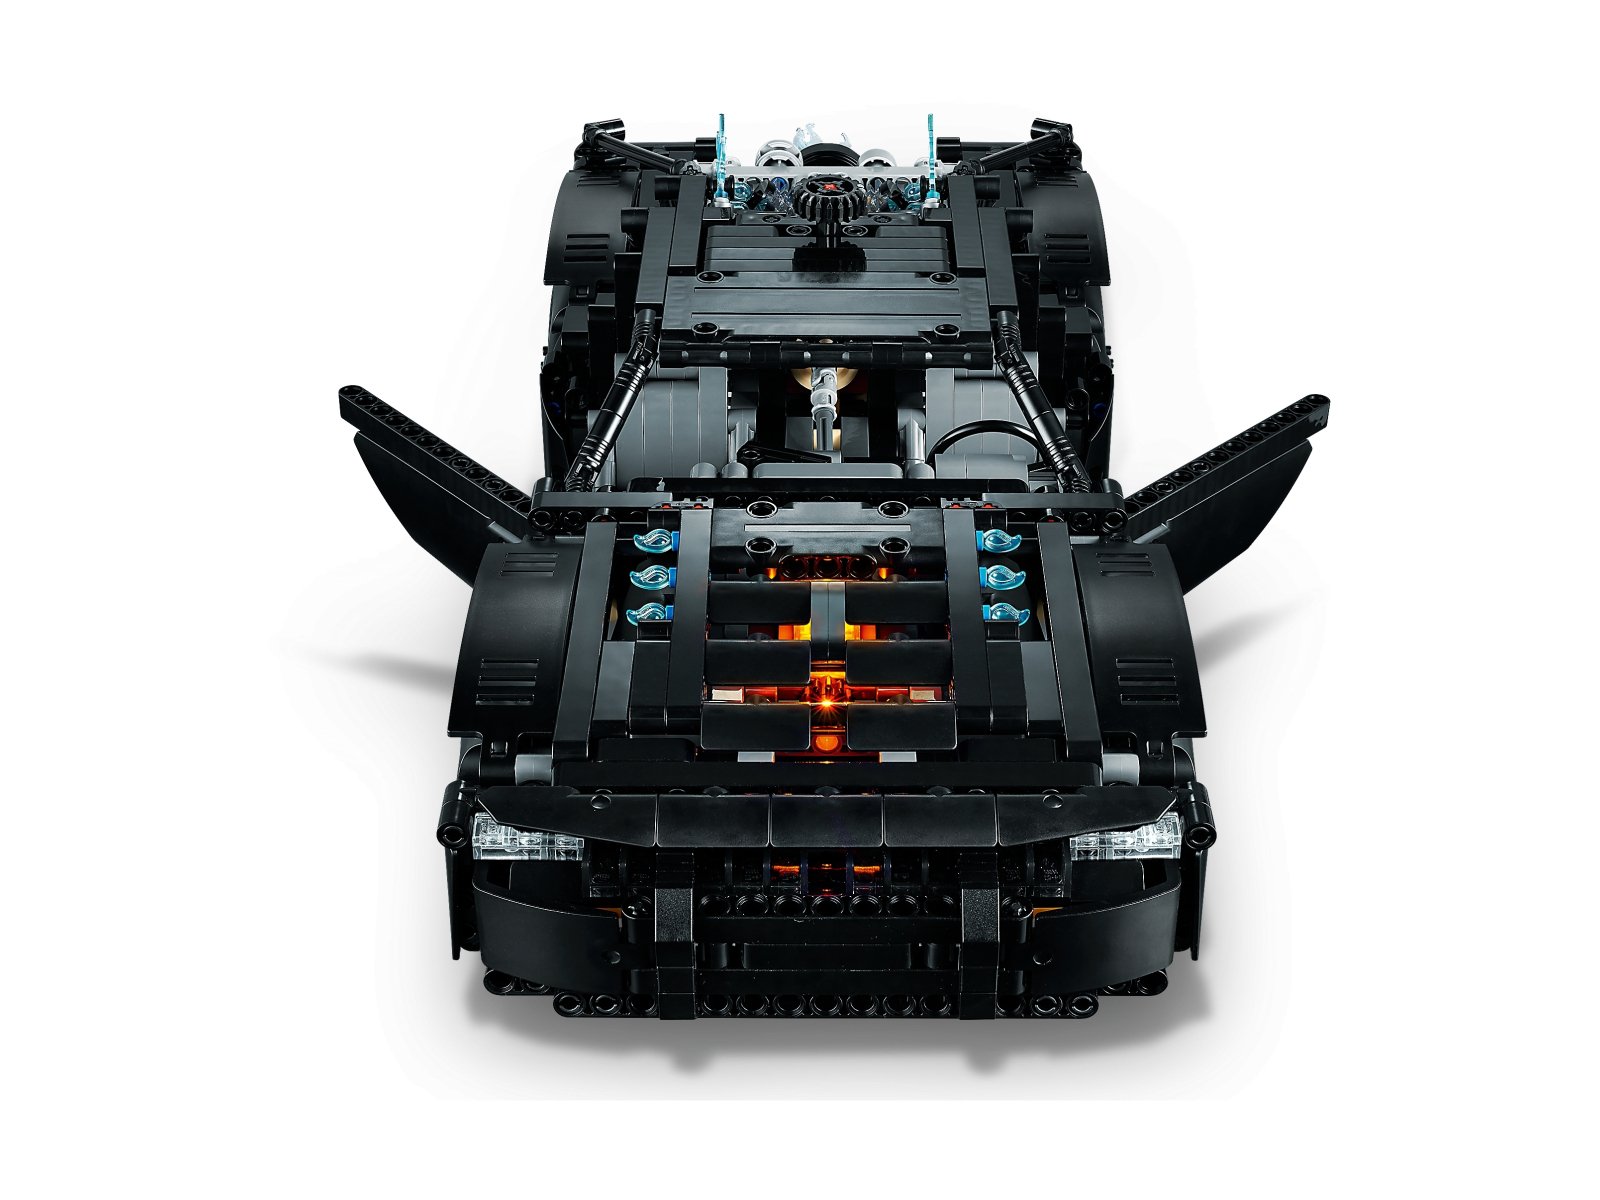 LEGO Technic 42127 BATMAN — BATMOBIL™